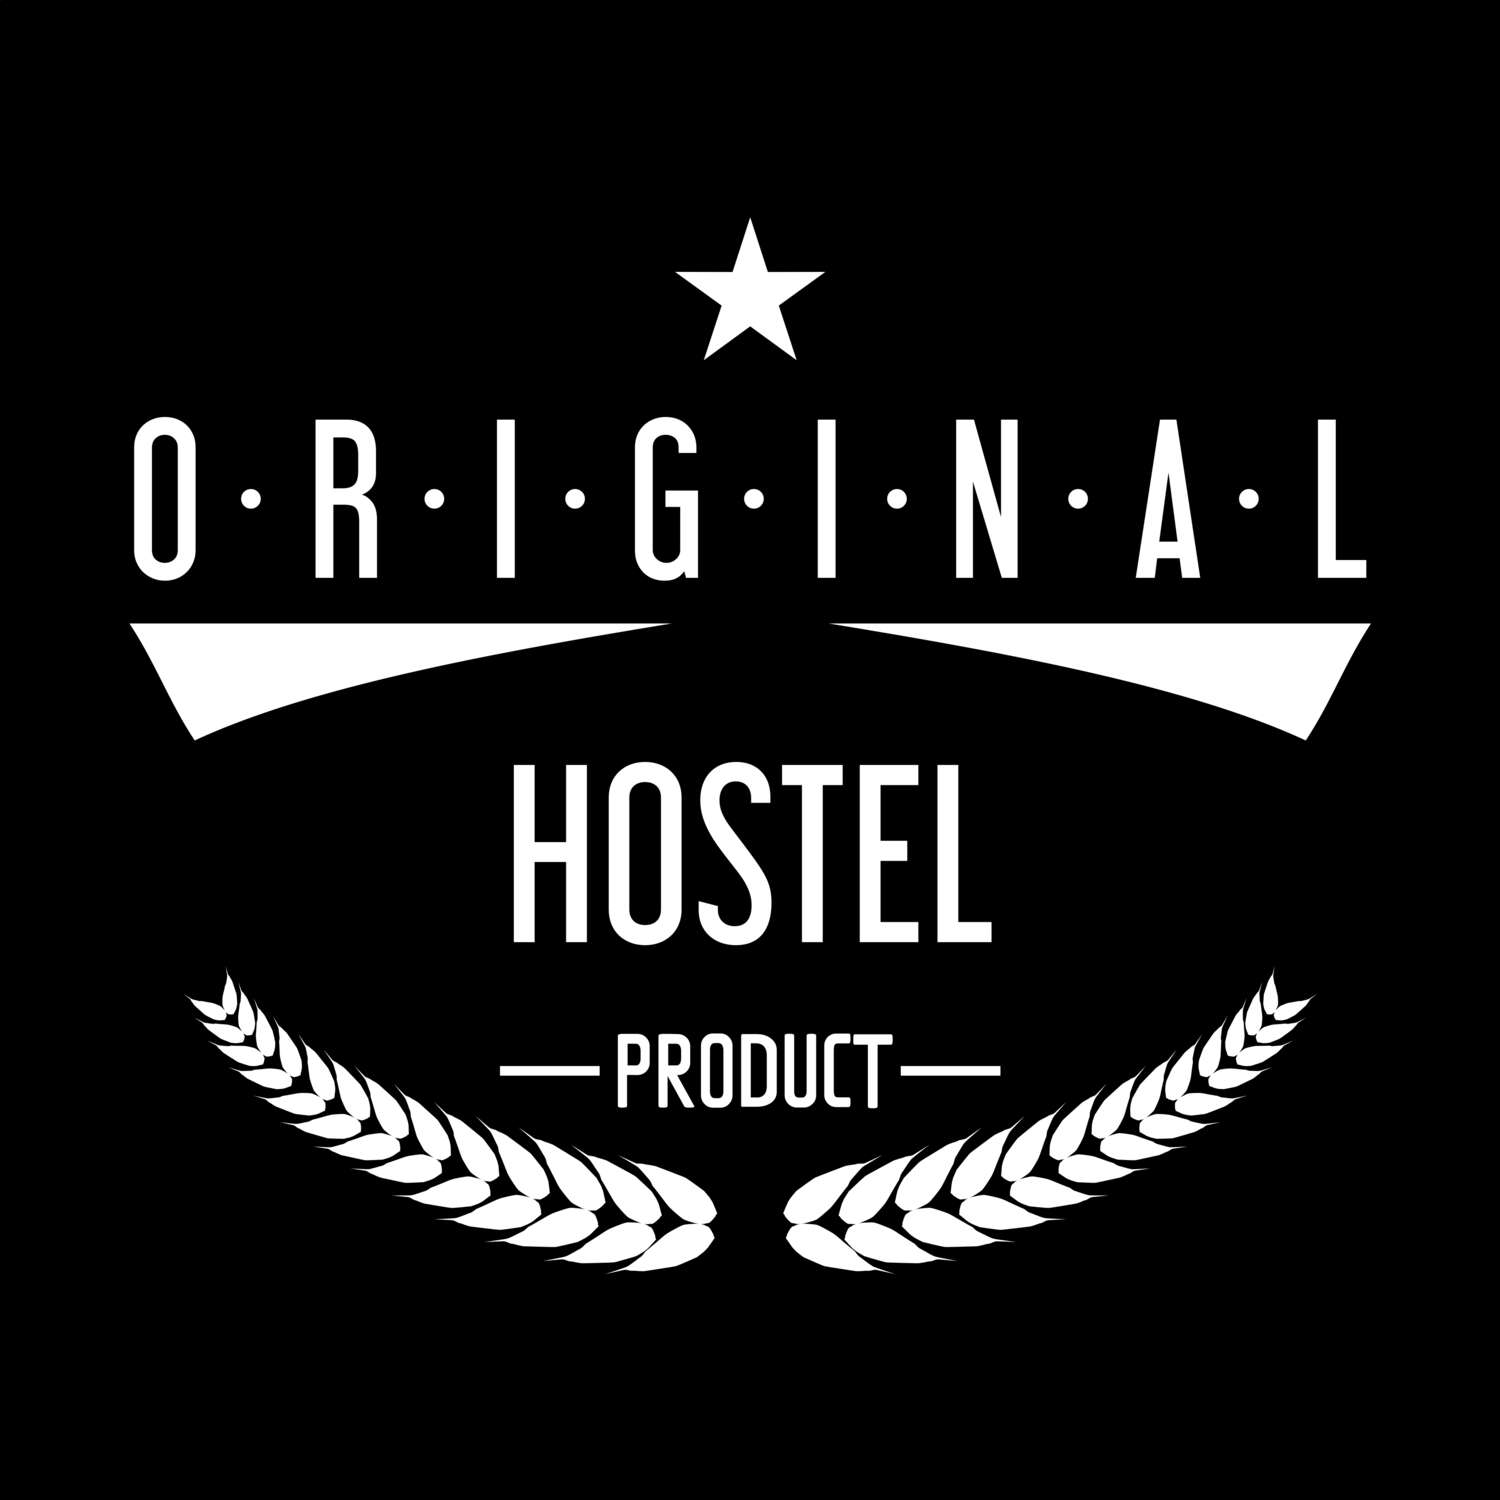 Hostel T-Shirt »Original Product«